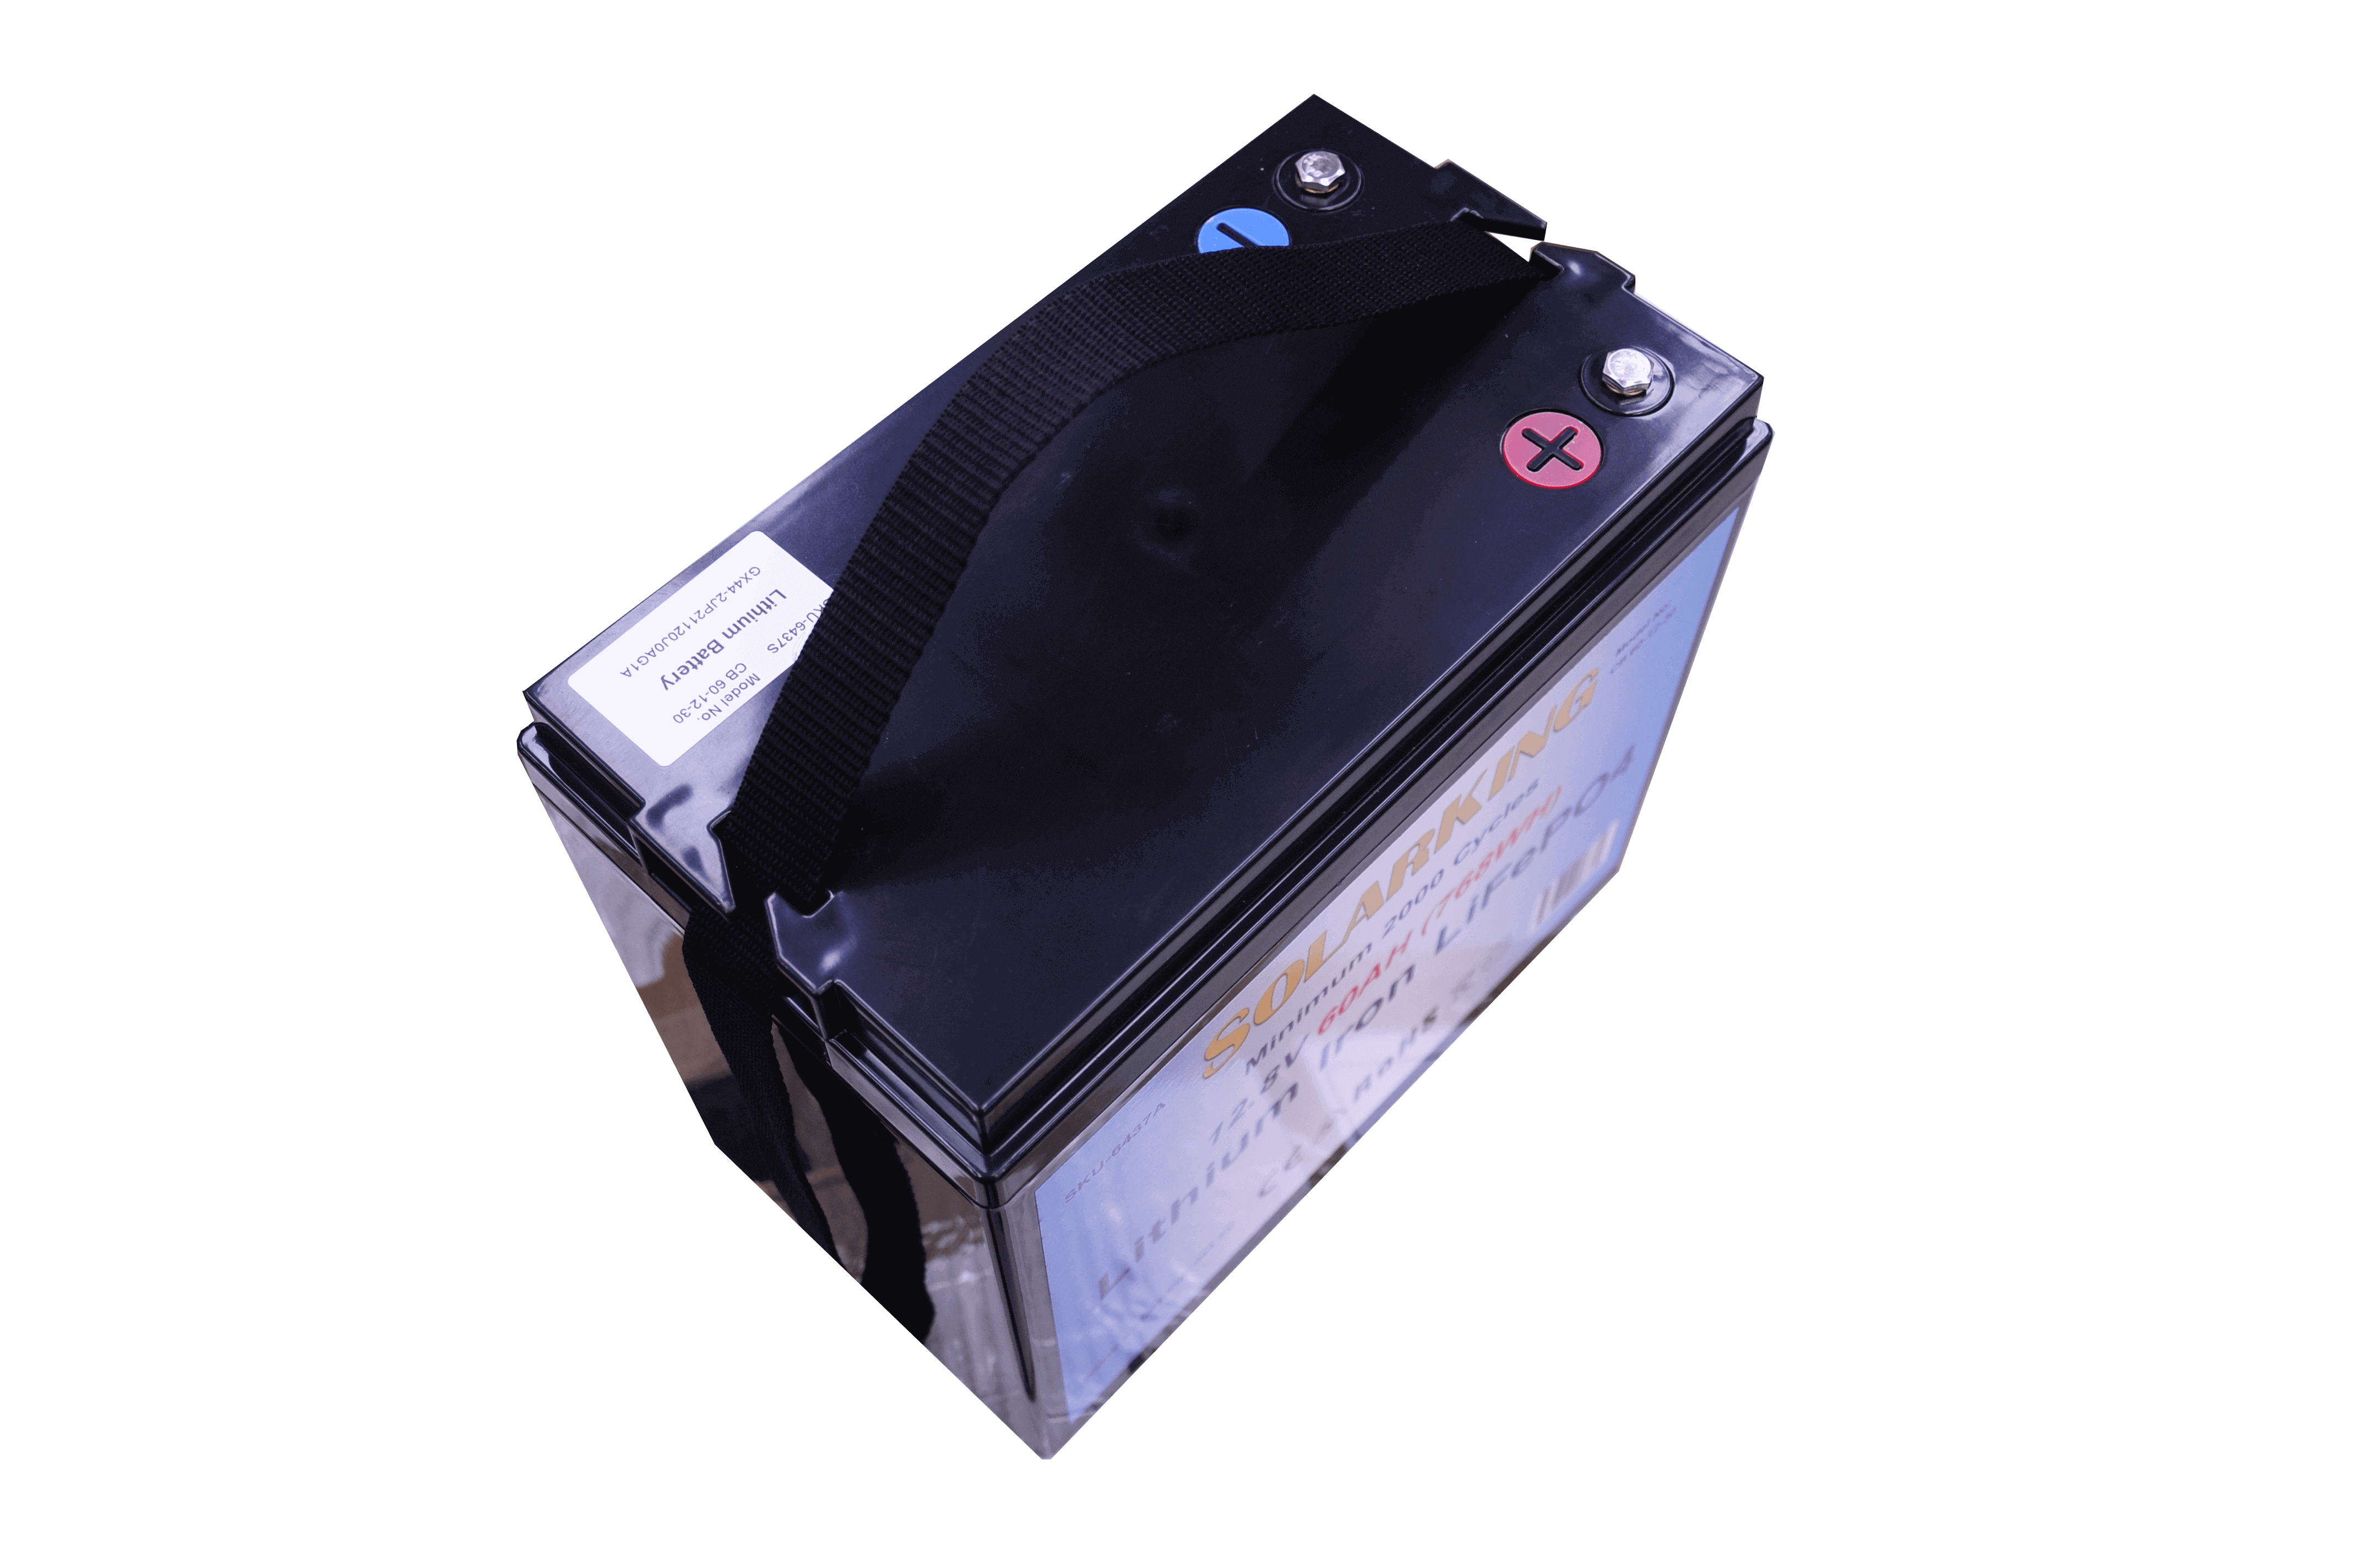 12.8V 60AH  Solarking Lithium Iron Battery Plastic  Case  CB-60-12-30